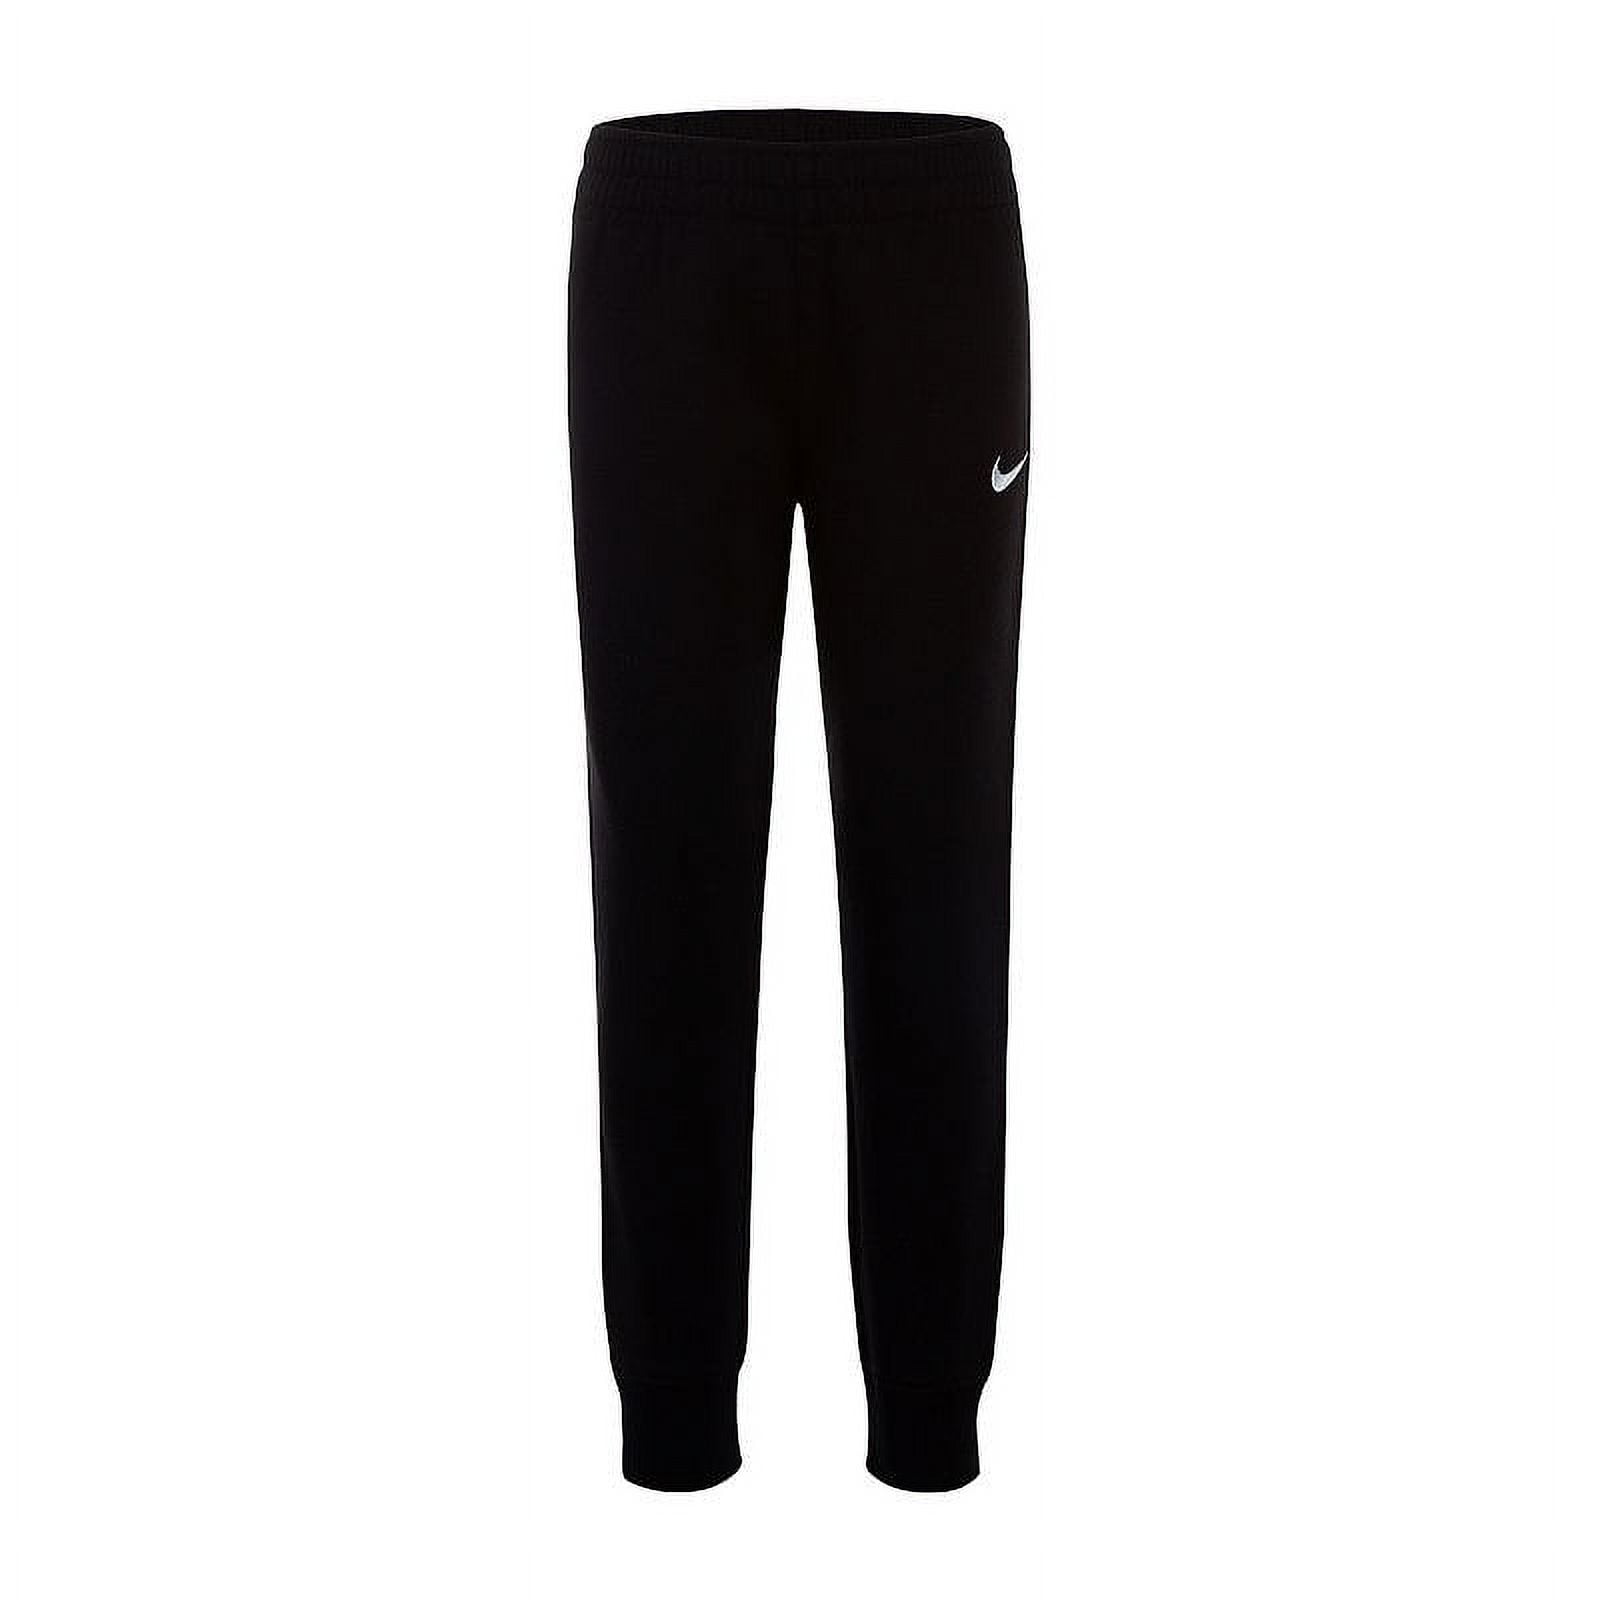 Nike boys Athletic Cuffed Sweat Pant 86F088 black Size 6 - Walmart.com